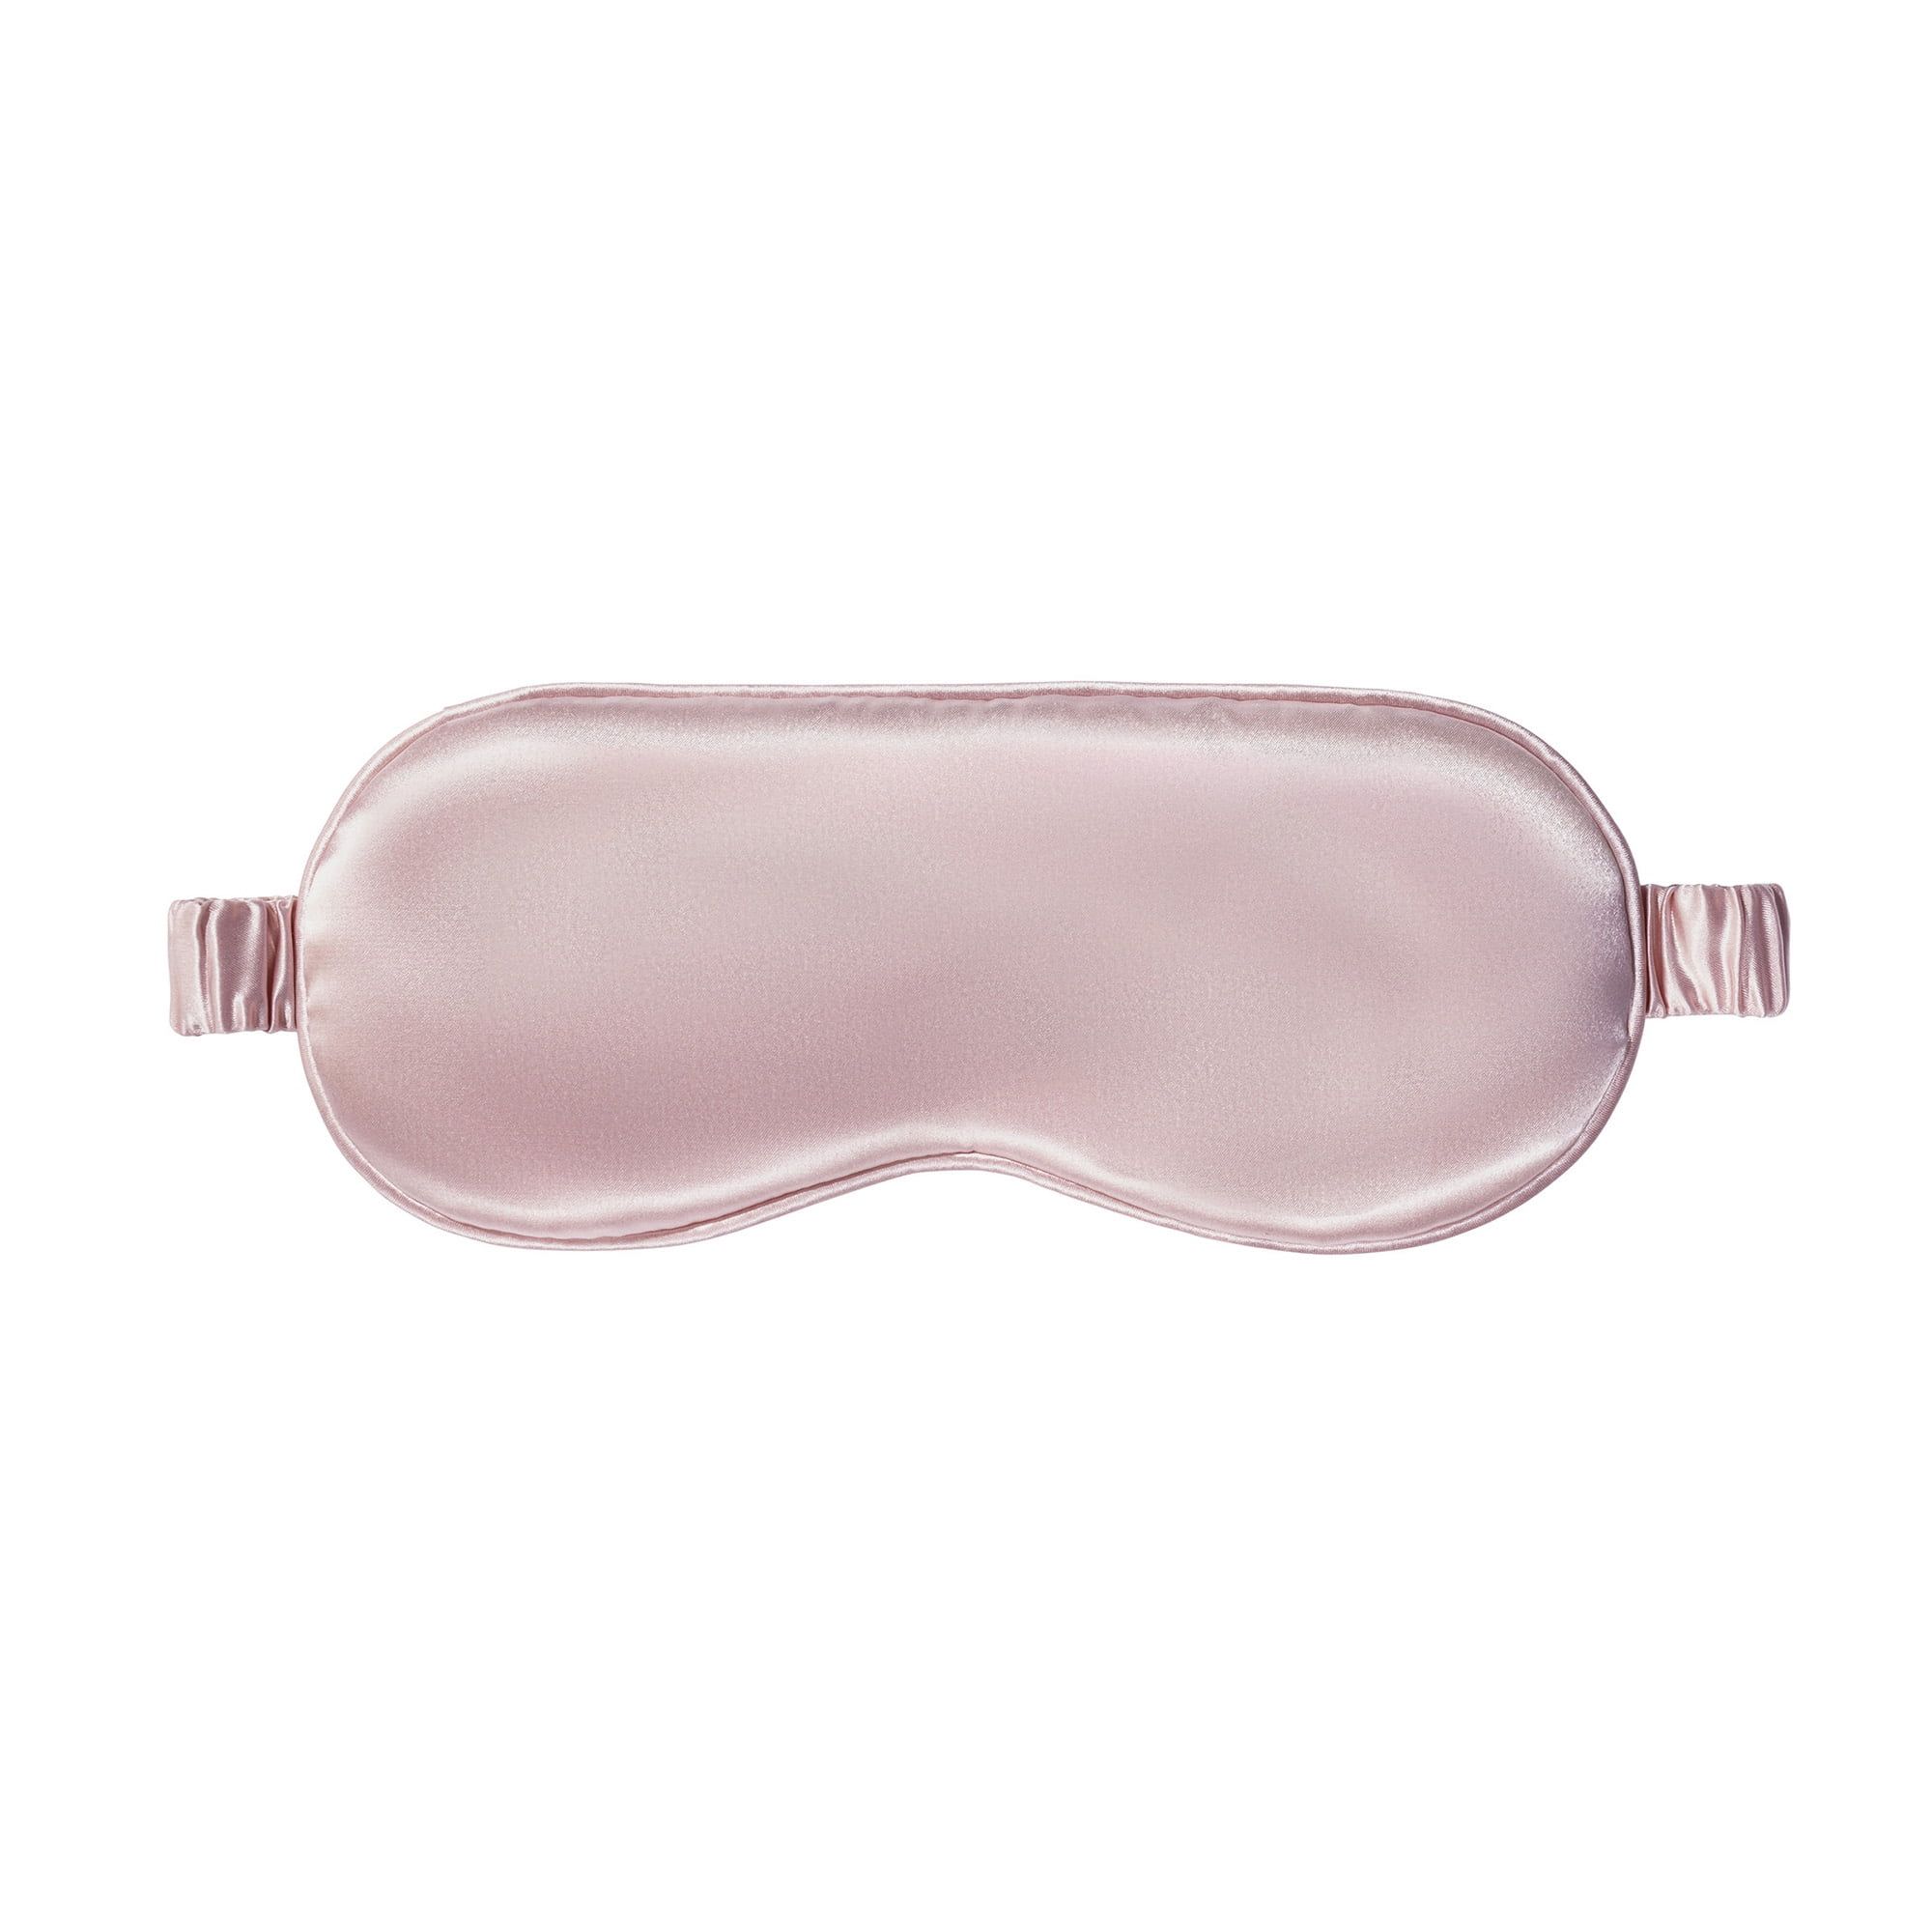 Slip Pure Silk Soft Sleep Mask with Elastic Band, Reusable, Pink | Walmart (US)